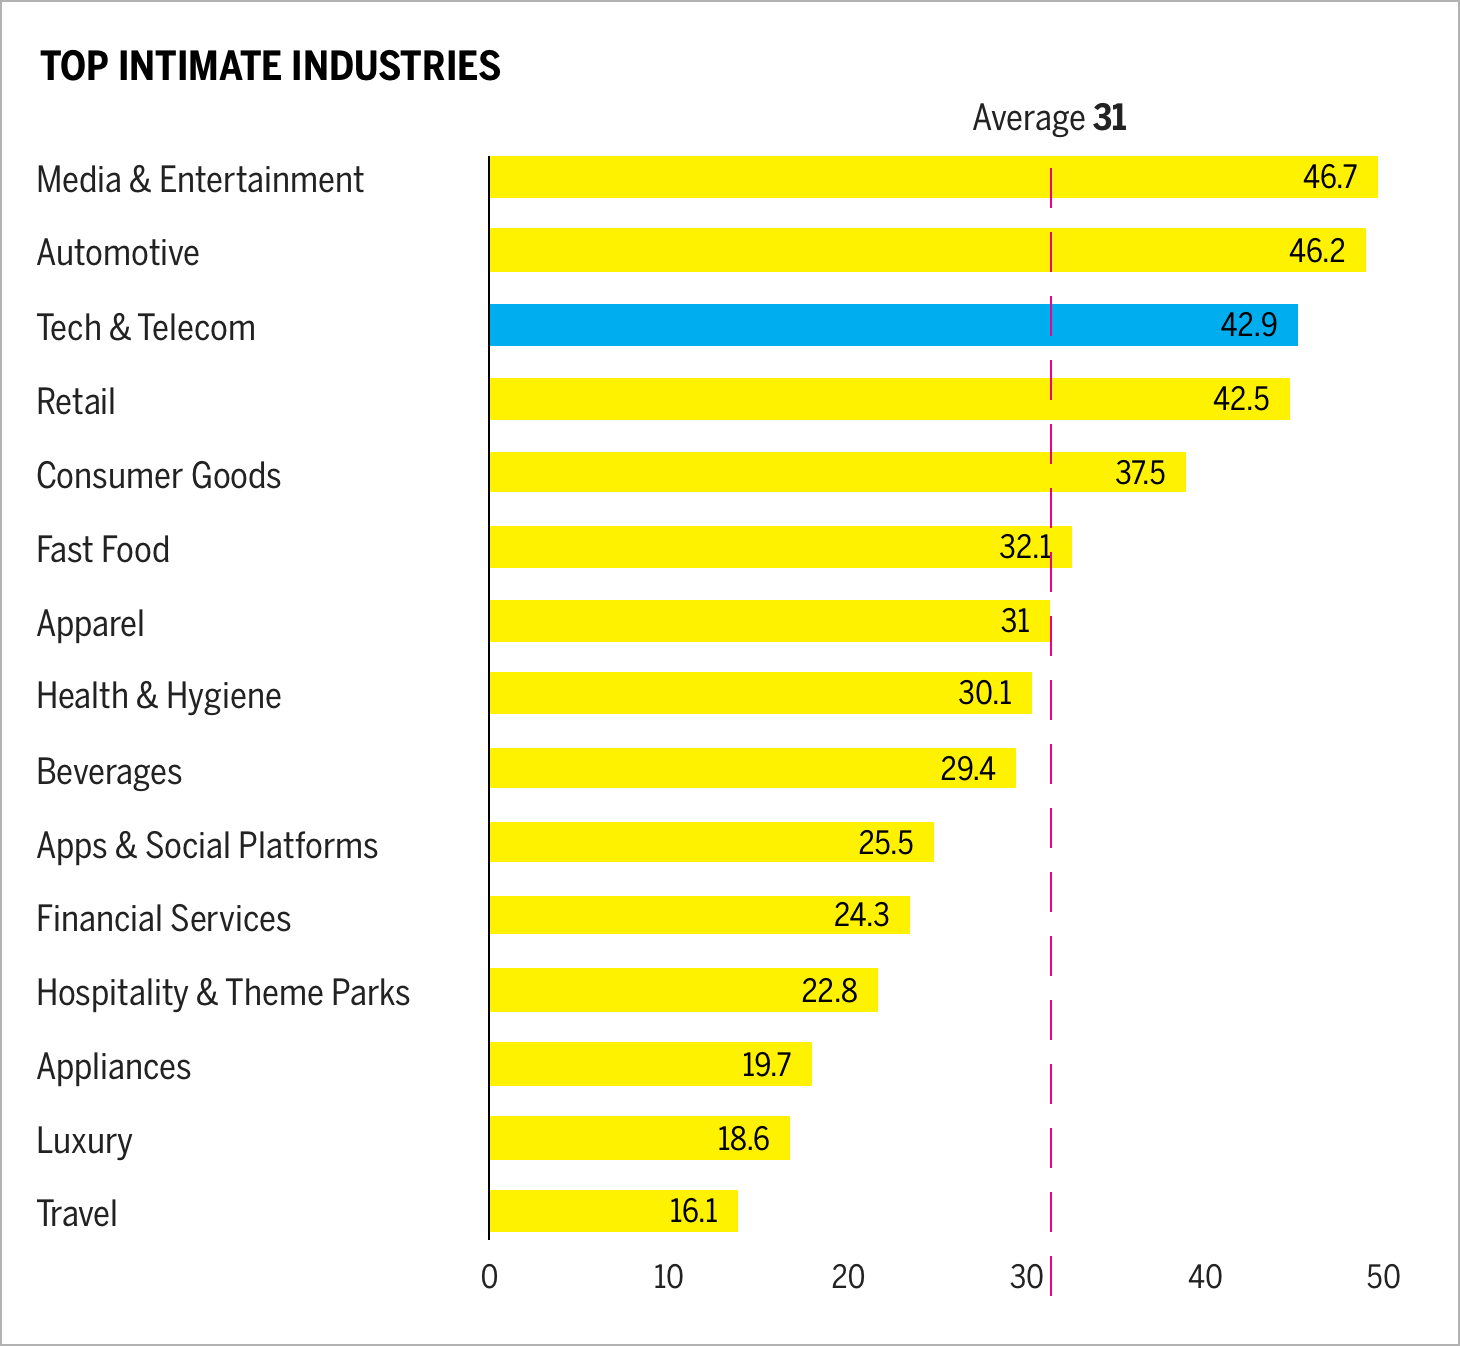 Top Intimate Industries